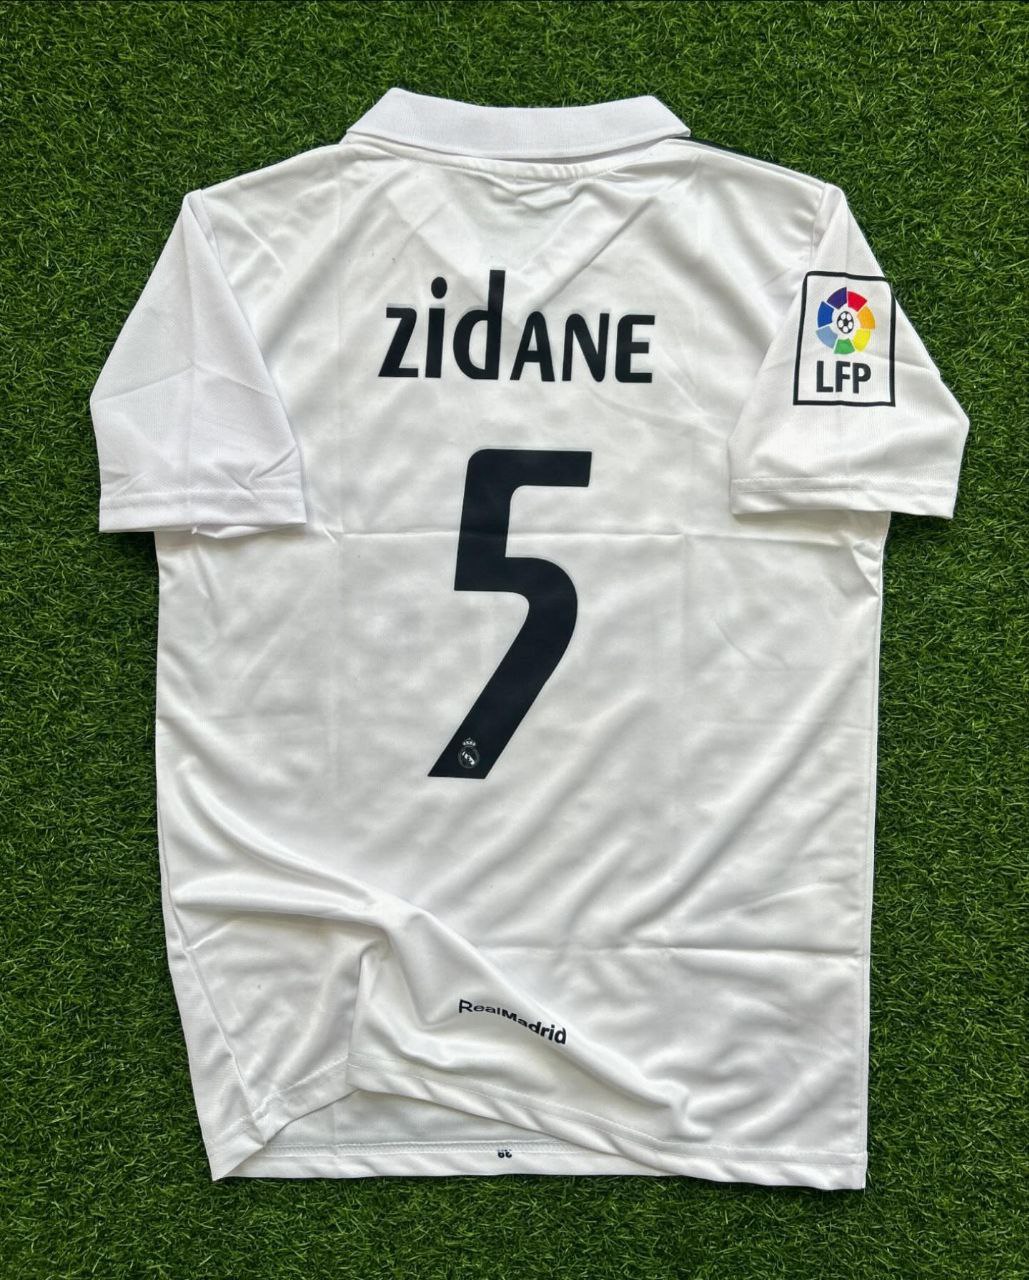 Zinédine Zidane Real Madrid White Retro Jersey